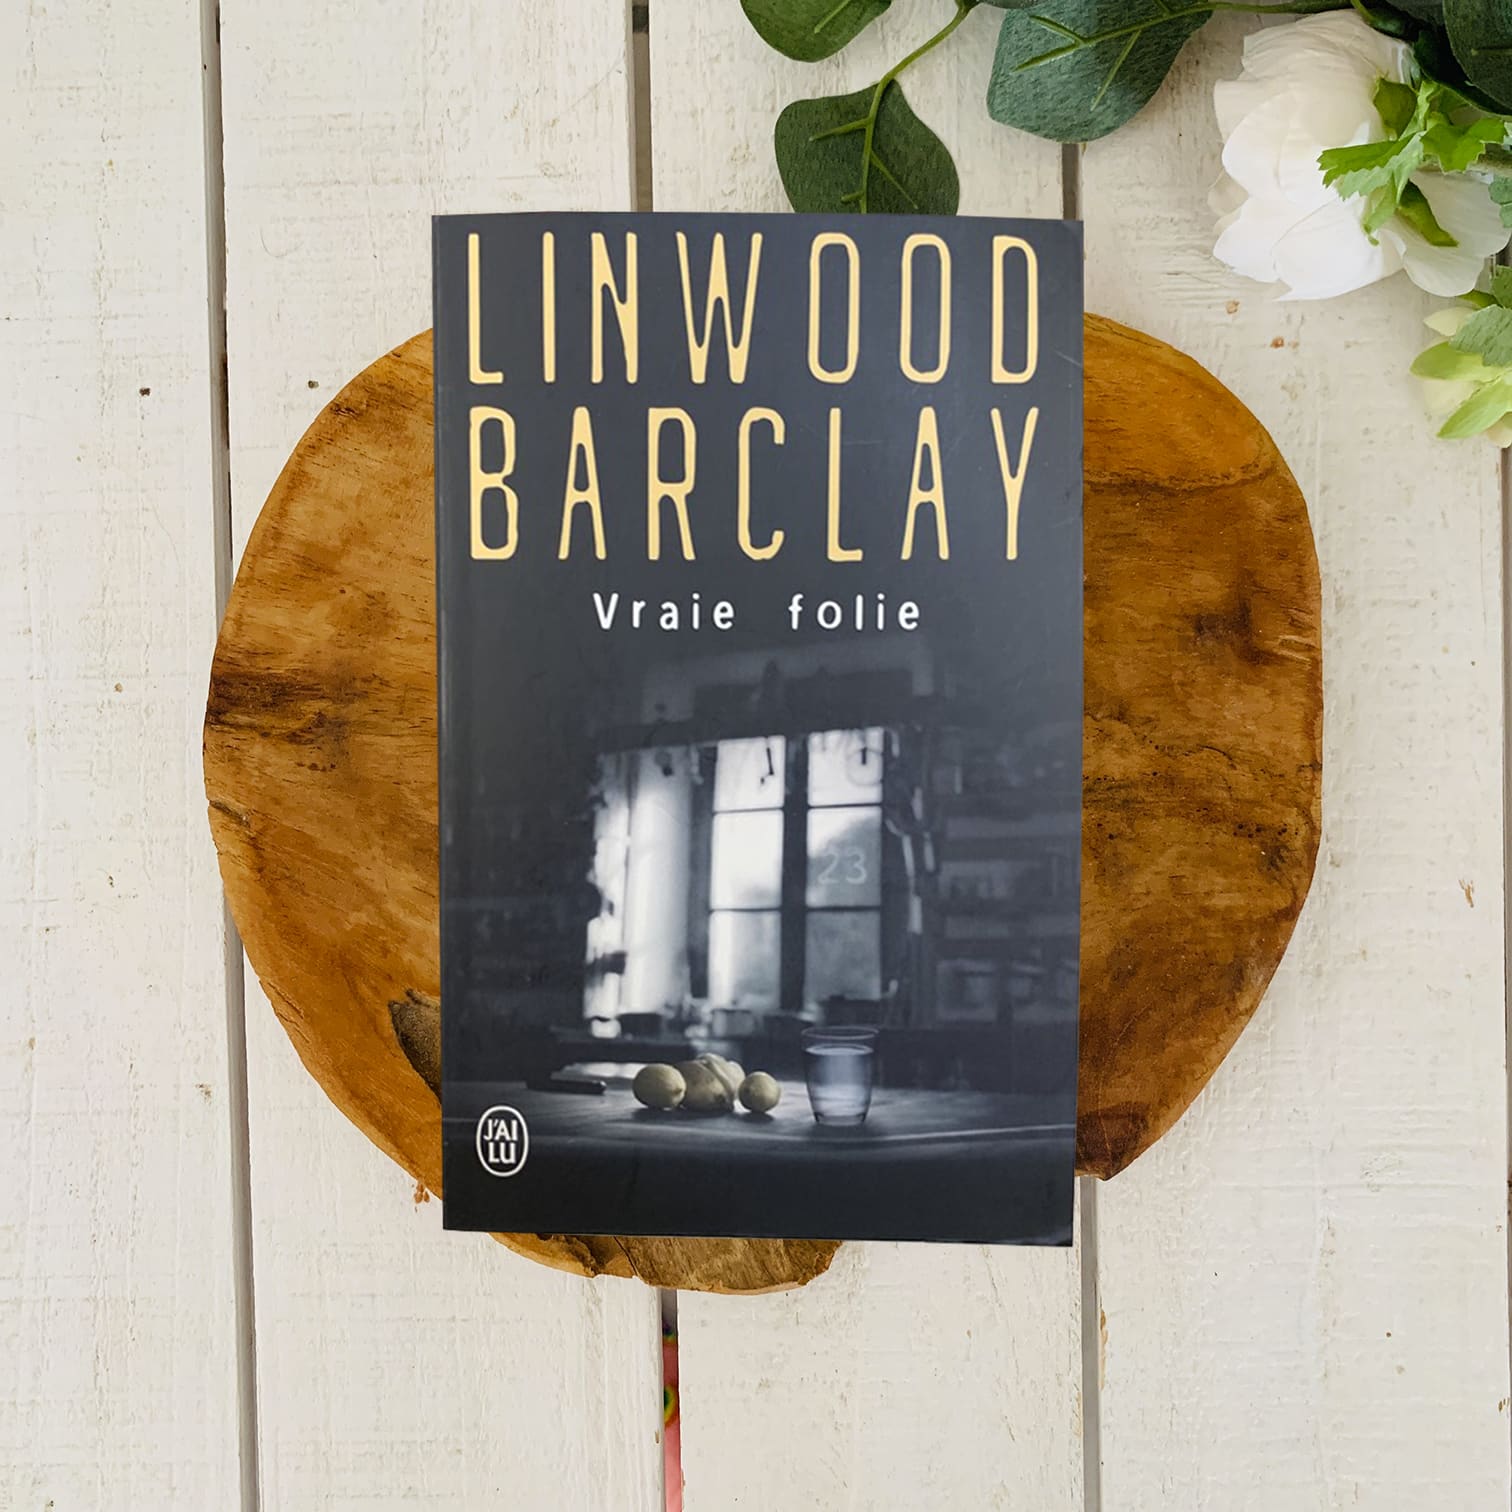 Vraie folie - Linwood Barclay